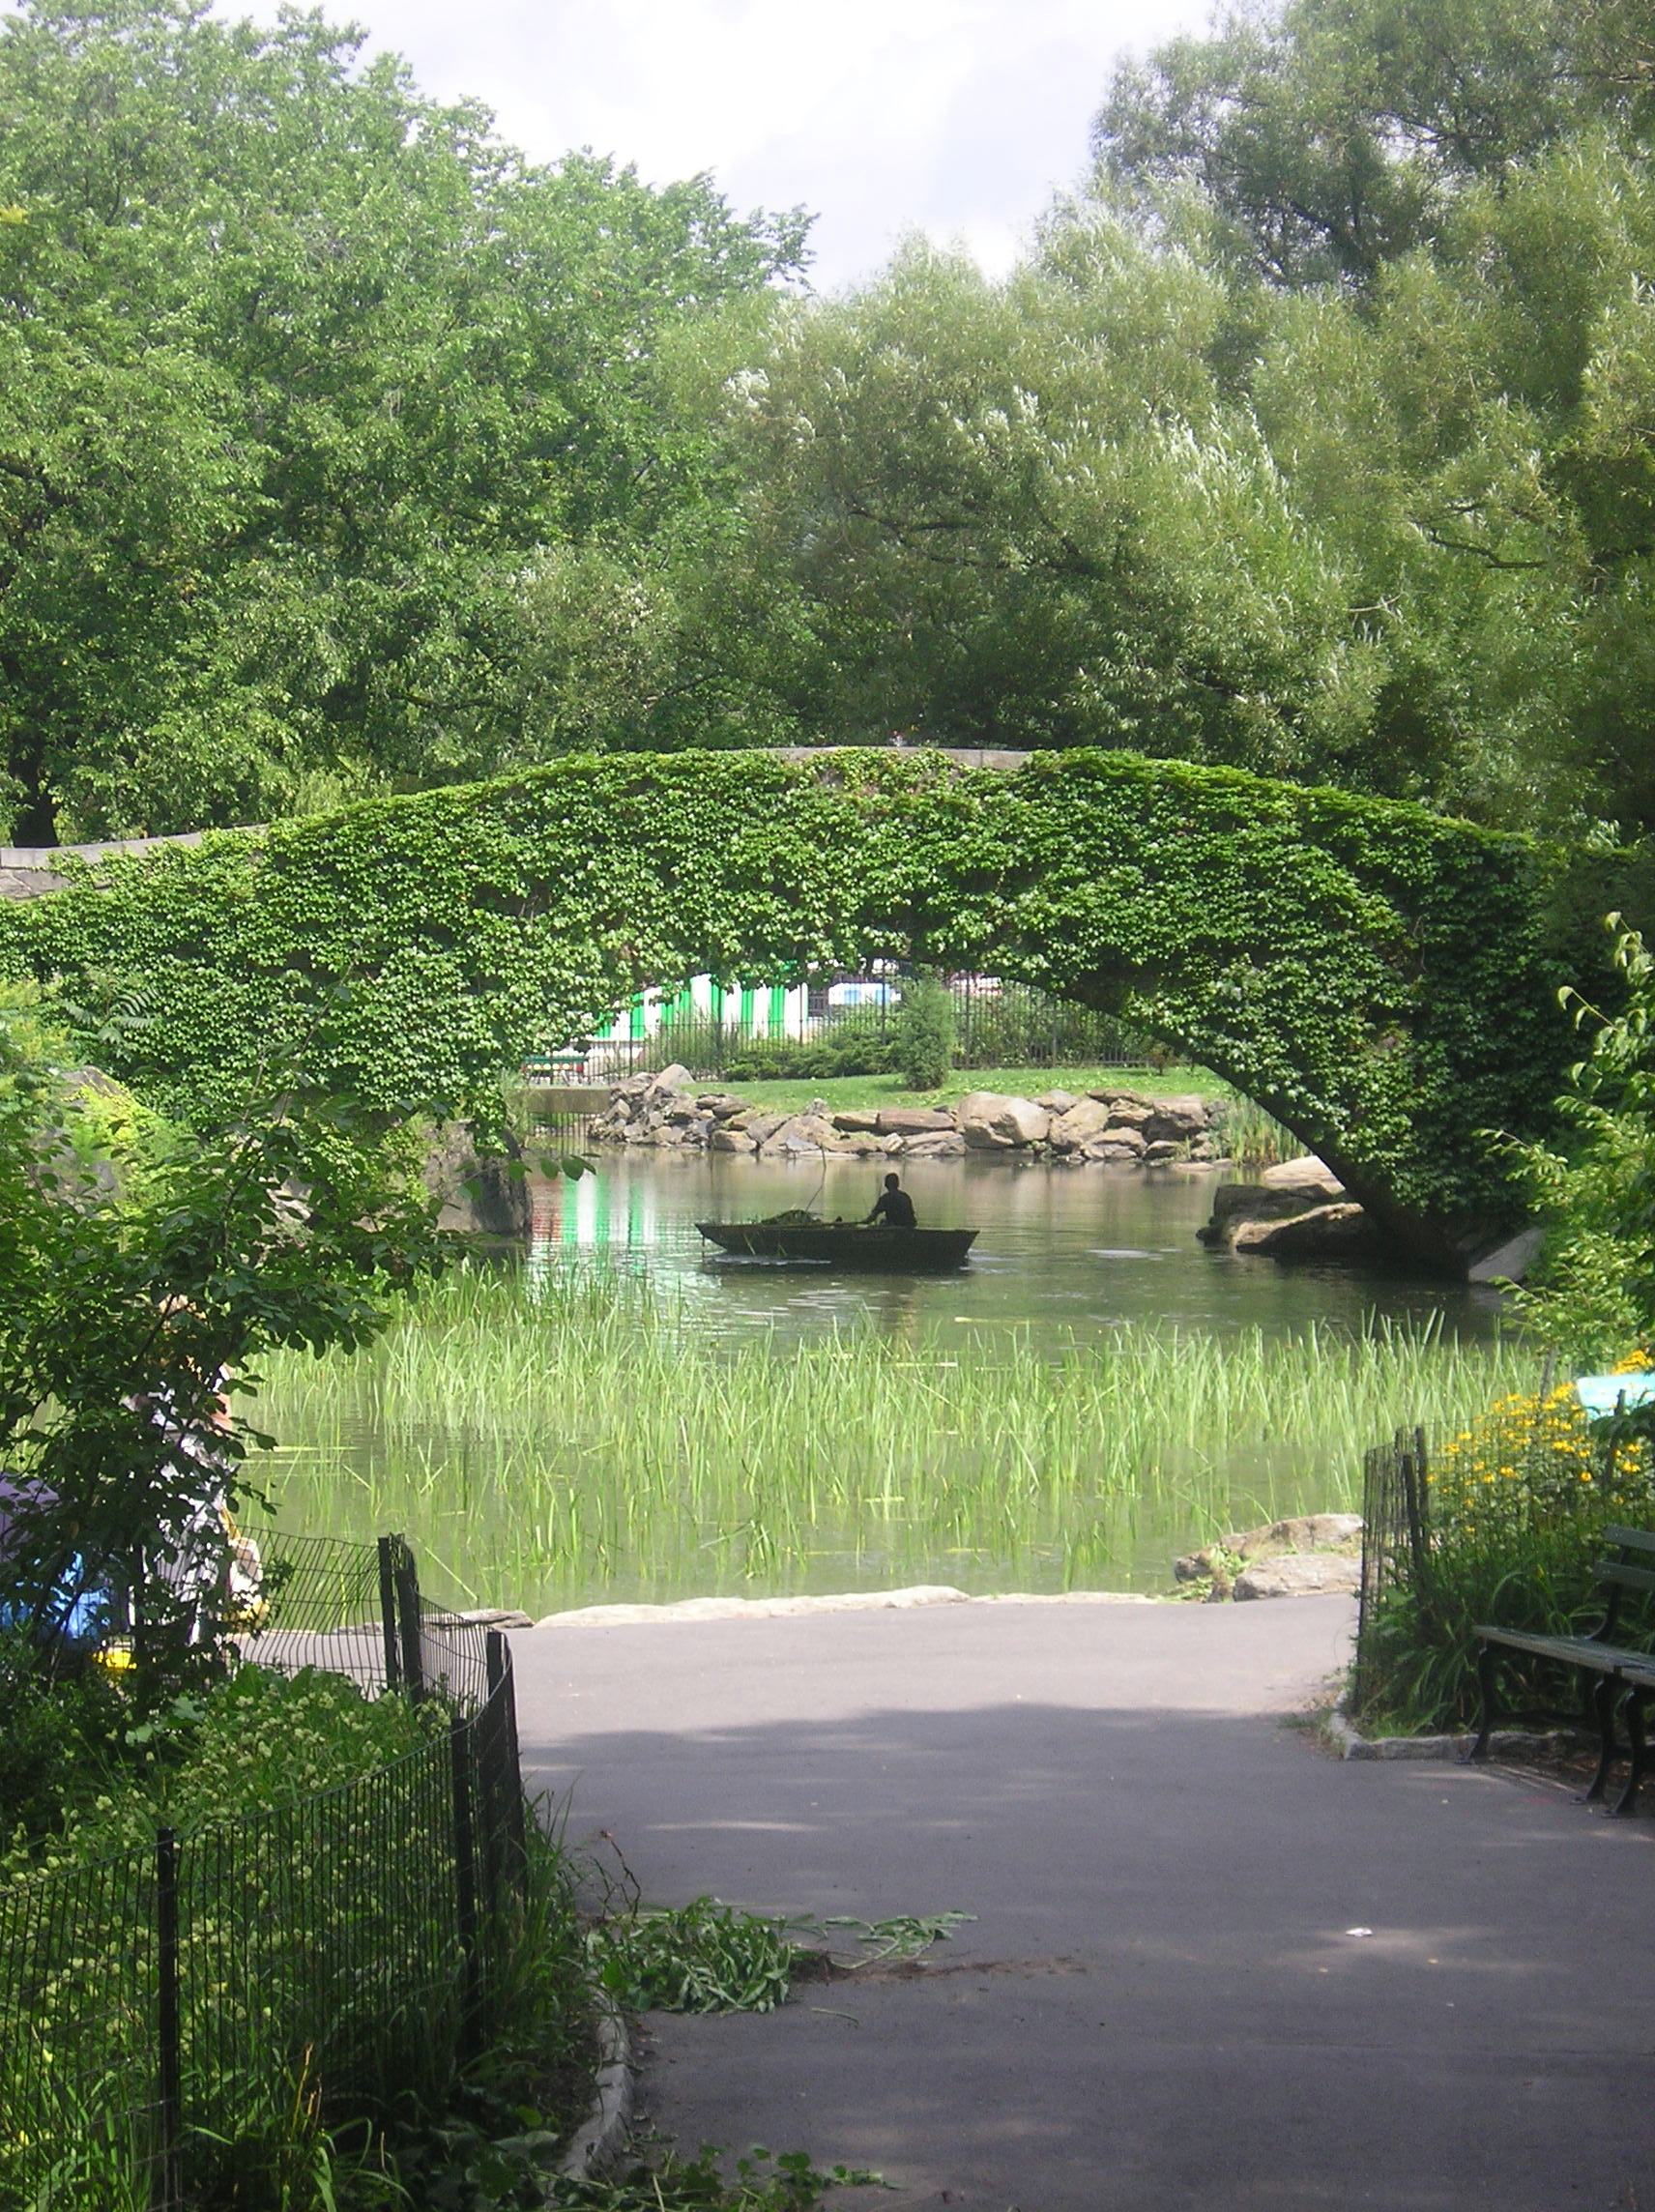 File:Central Park 1.jpg - Wikipedia